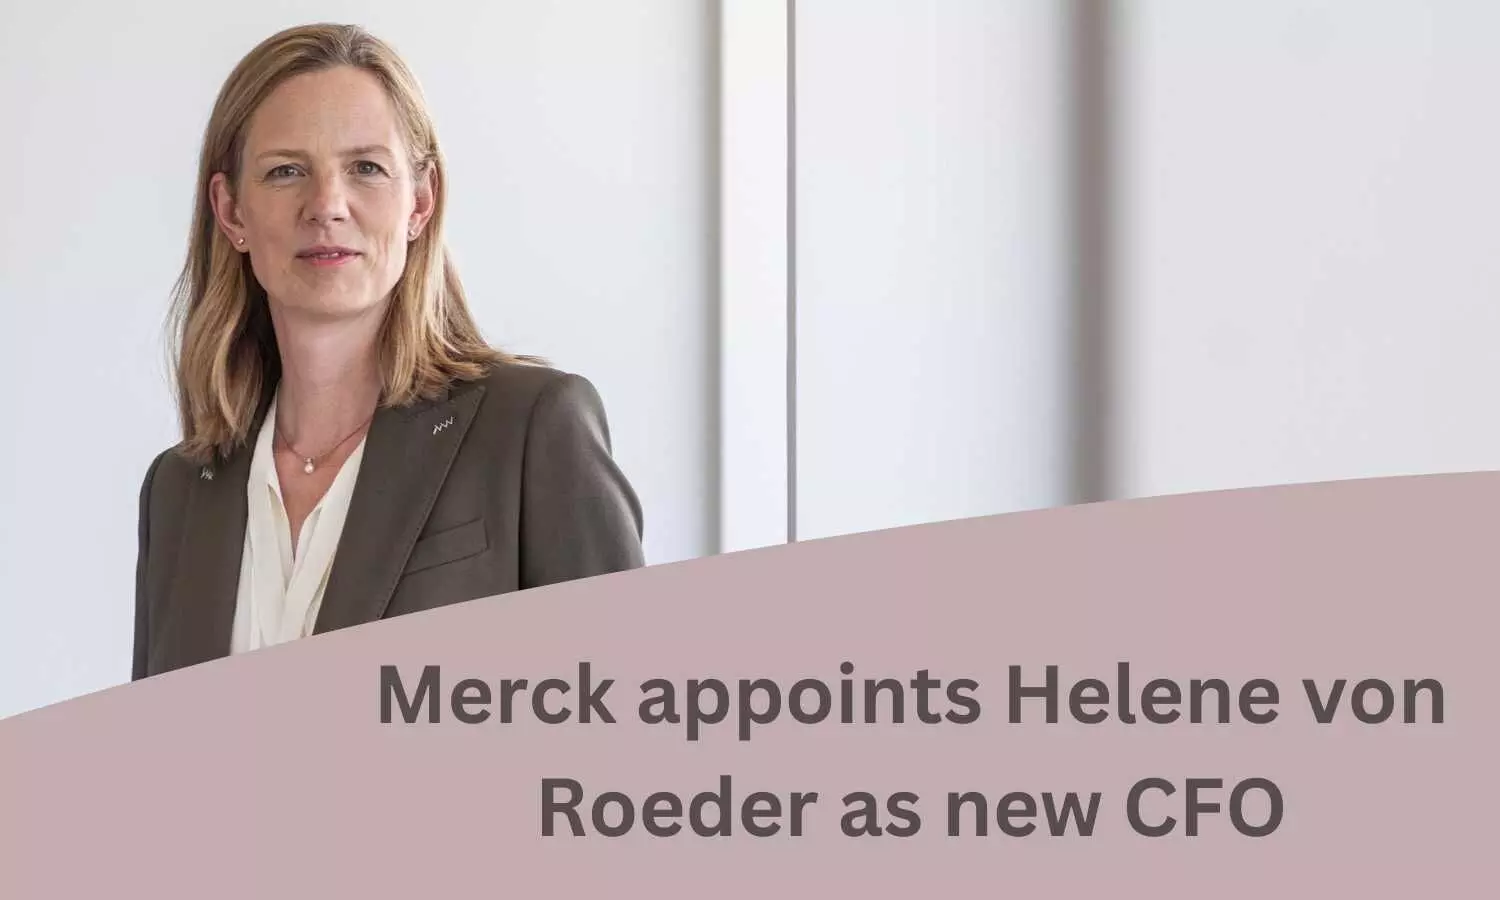 Merck appoints Helene von Roeder as new CFO